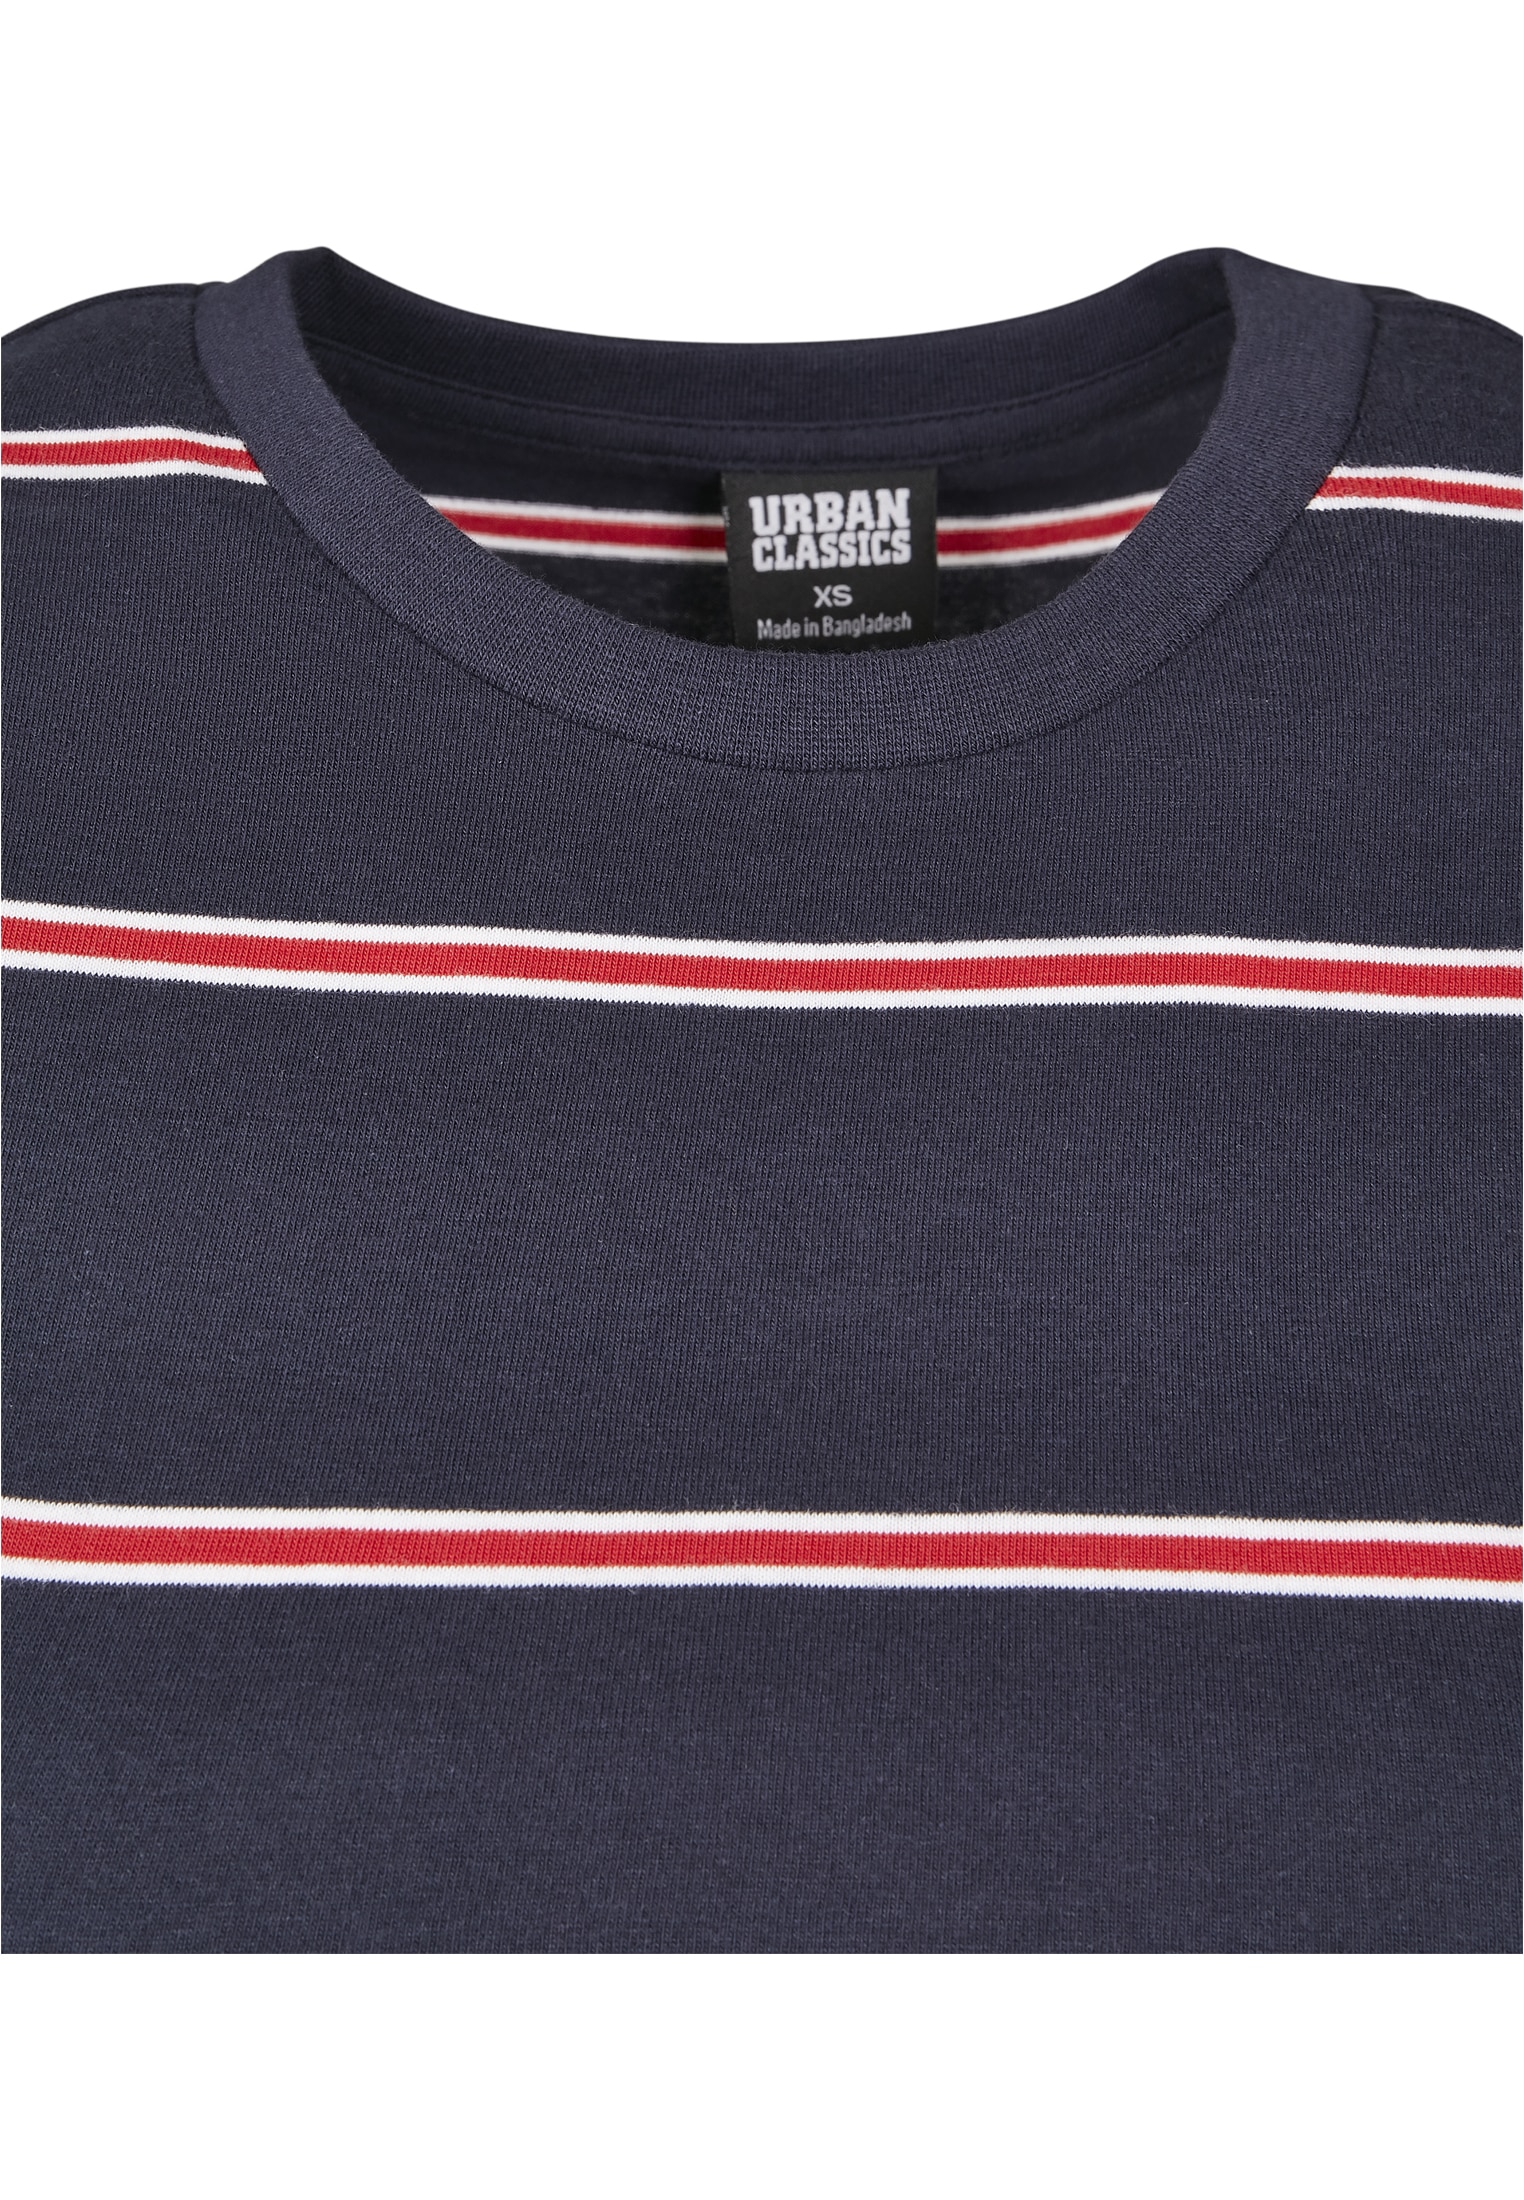 CLASSICS URBAN Dyed Ladies T-Shirt (1 BAUR Tee«, | Skate online tlg.) bestellen Stripe Cropped »Damen Yarn